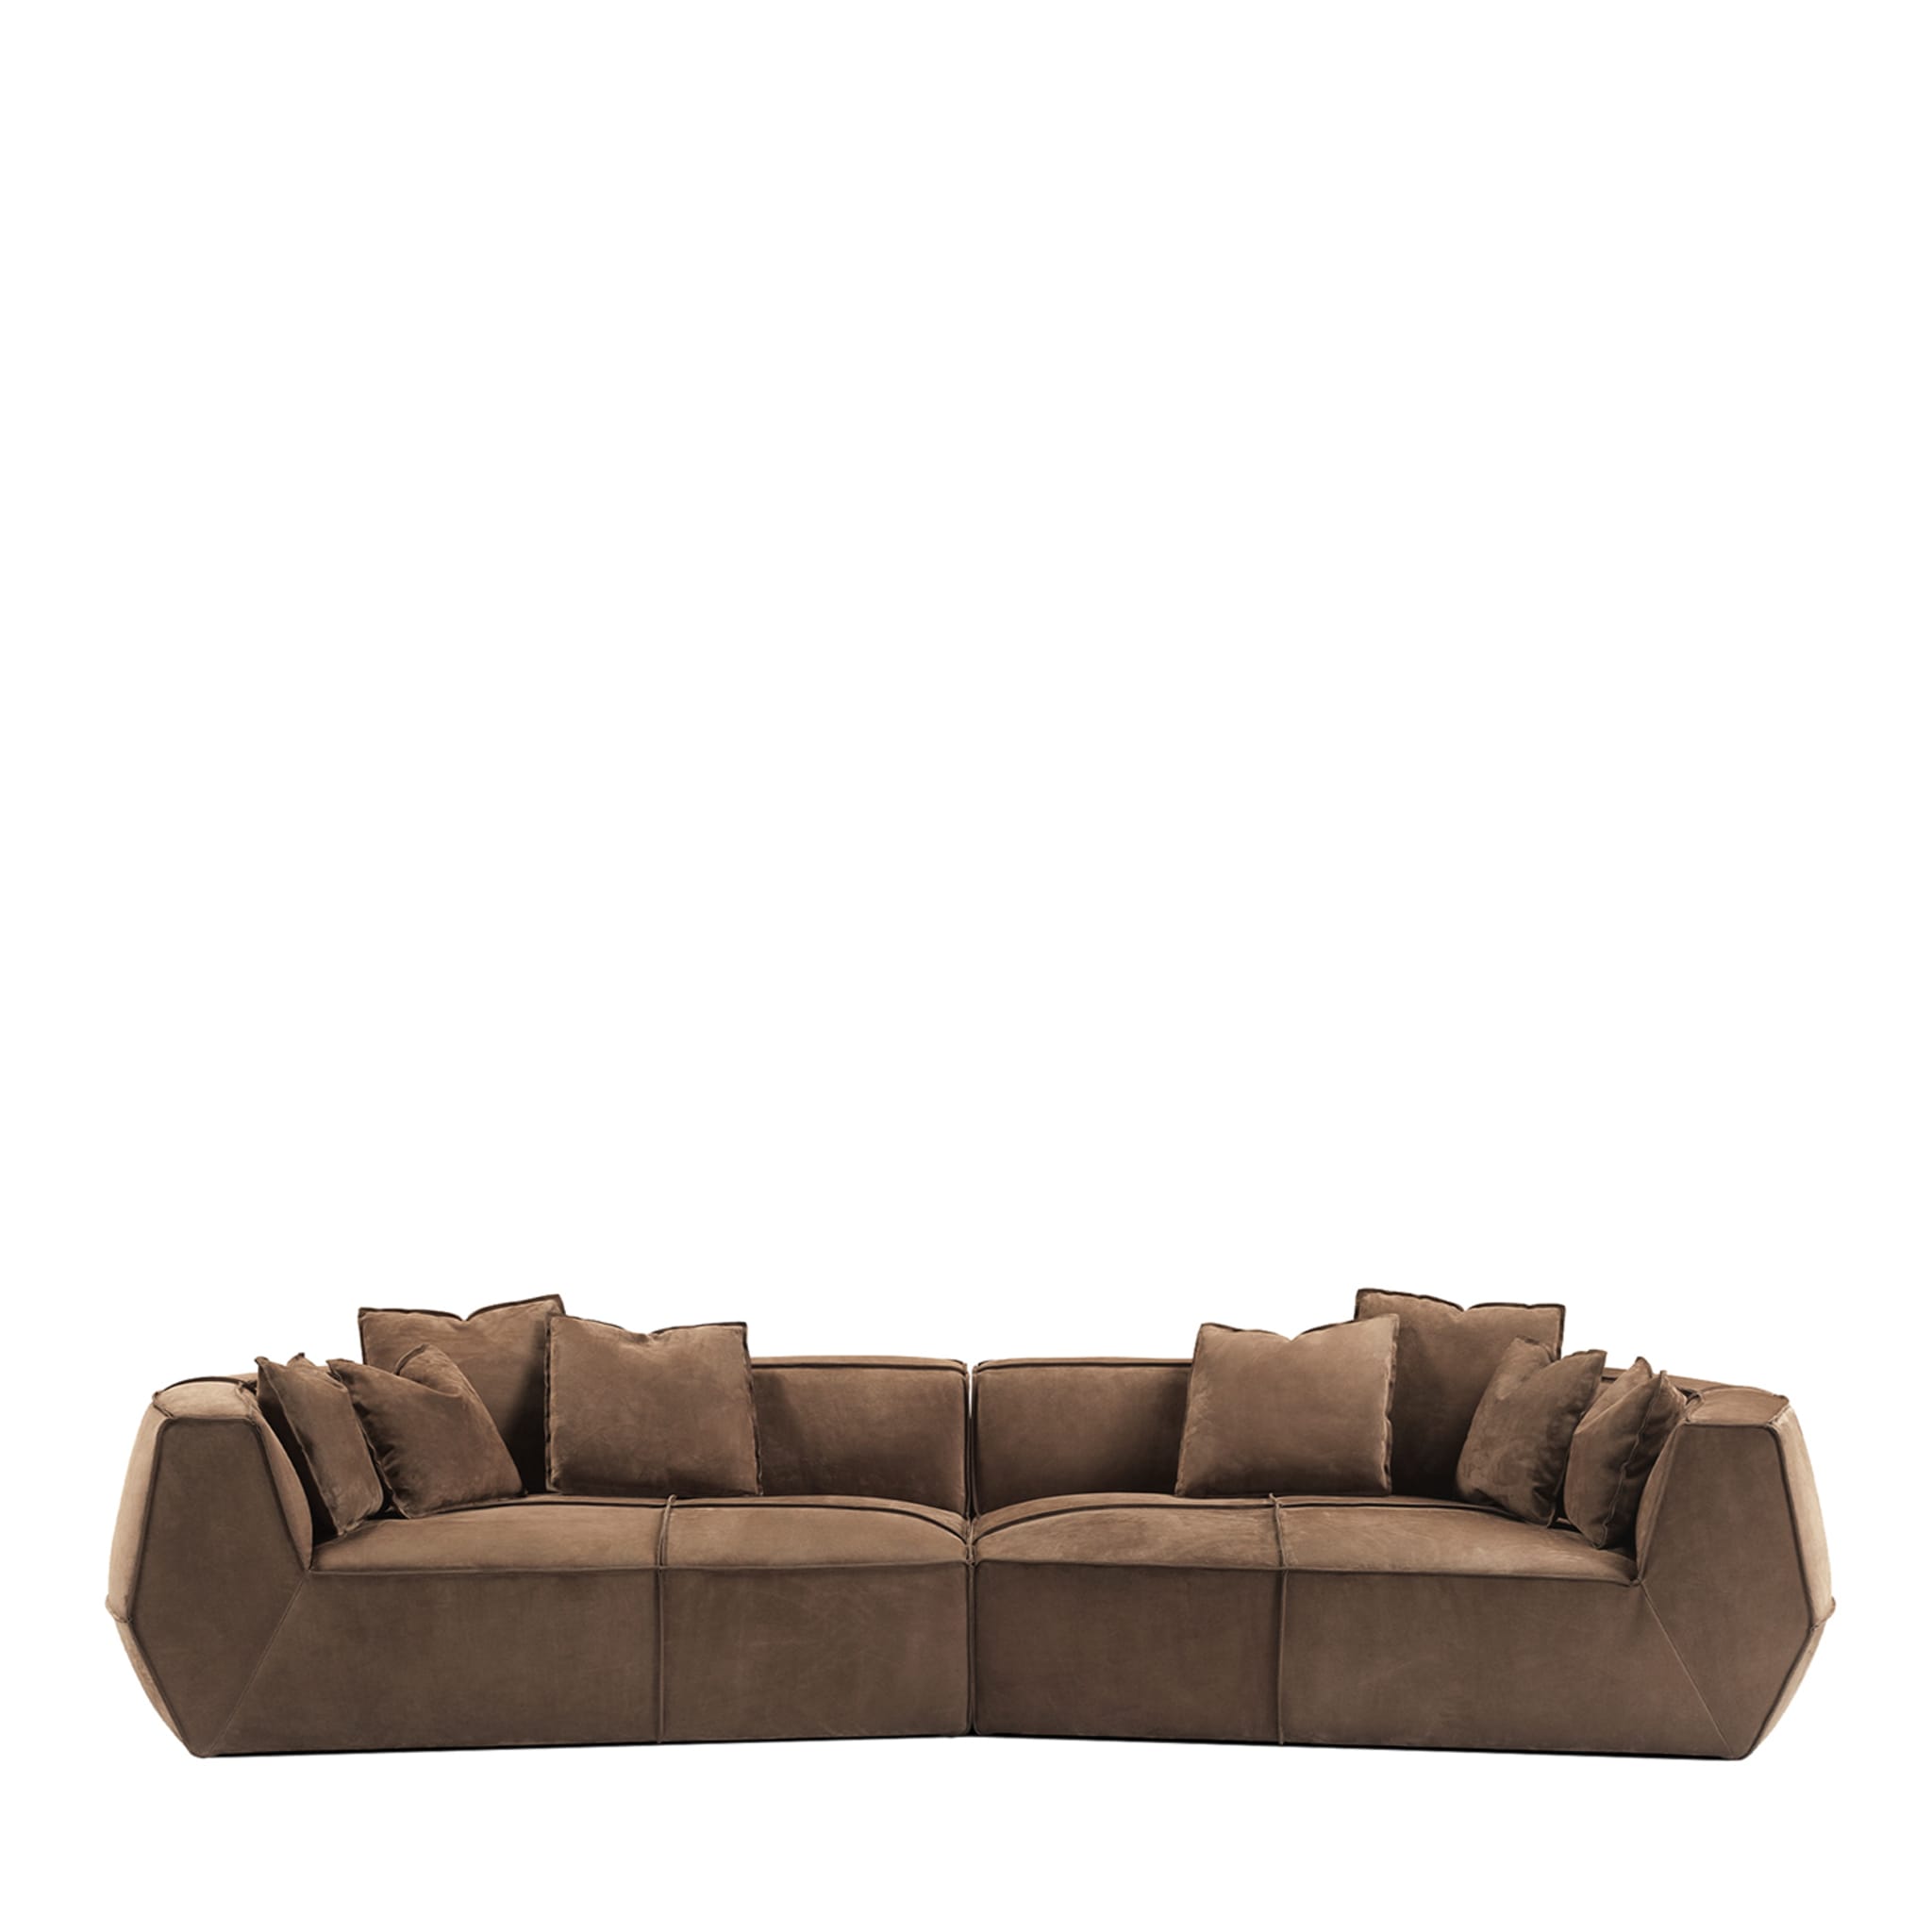 Infinito Medium Brown Sofa by Lorenza Bozzoli - Main view